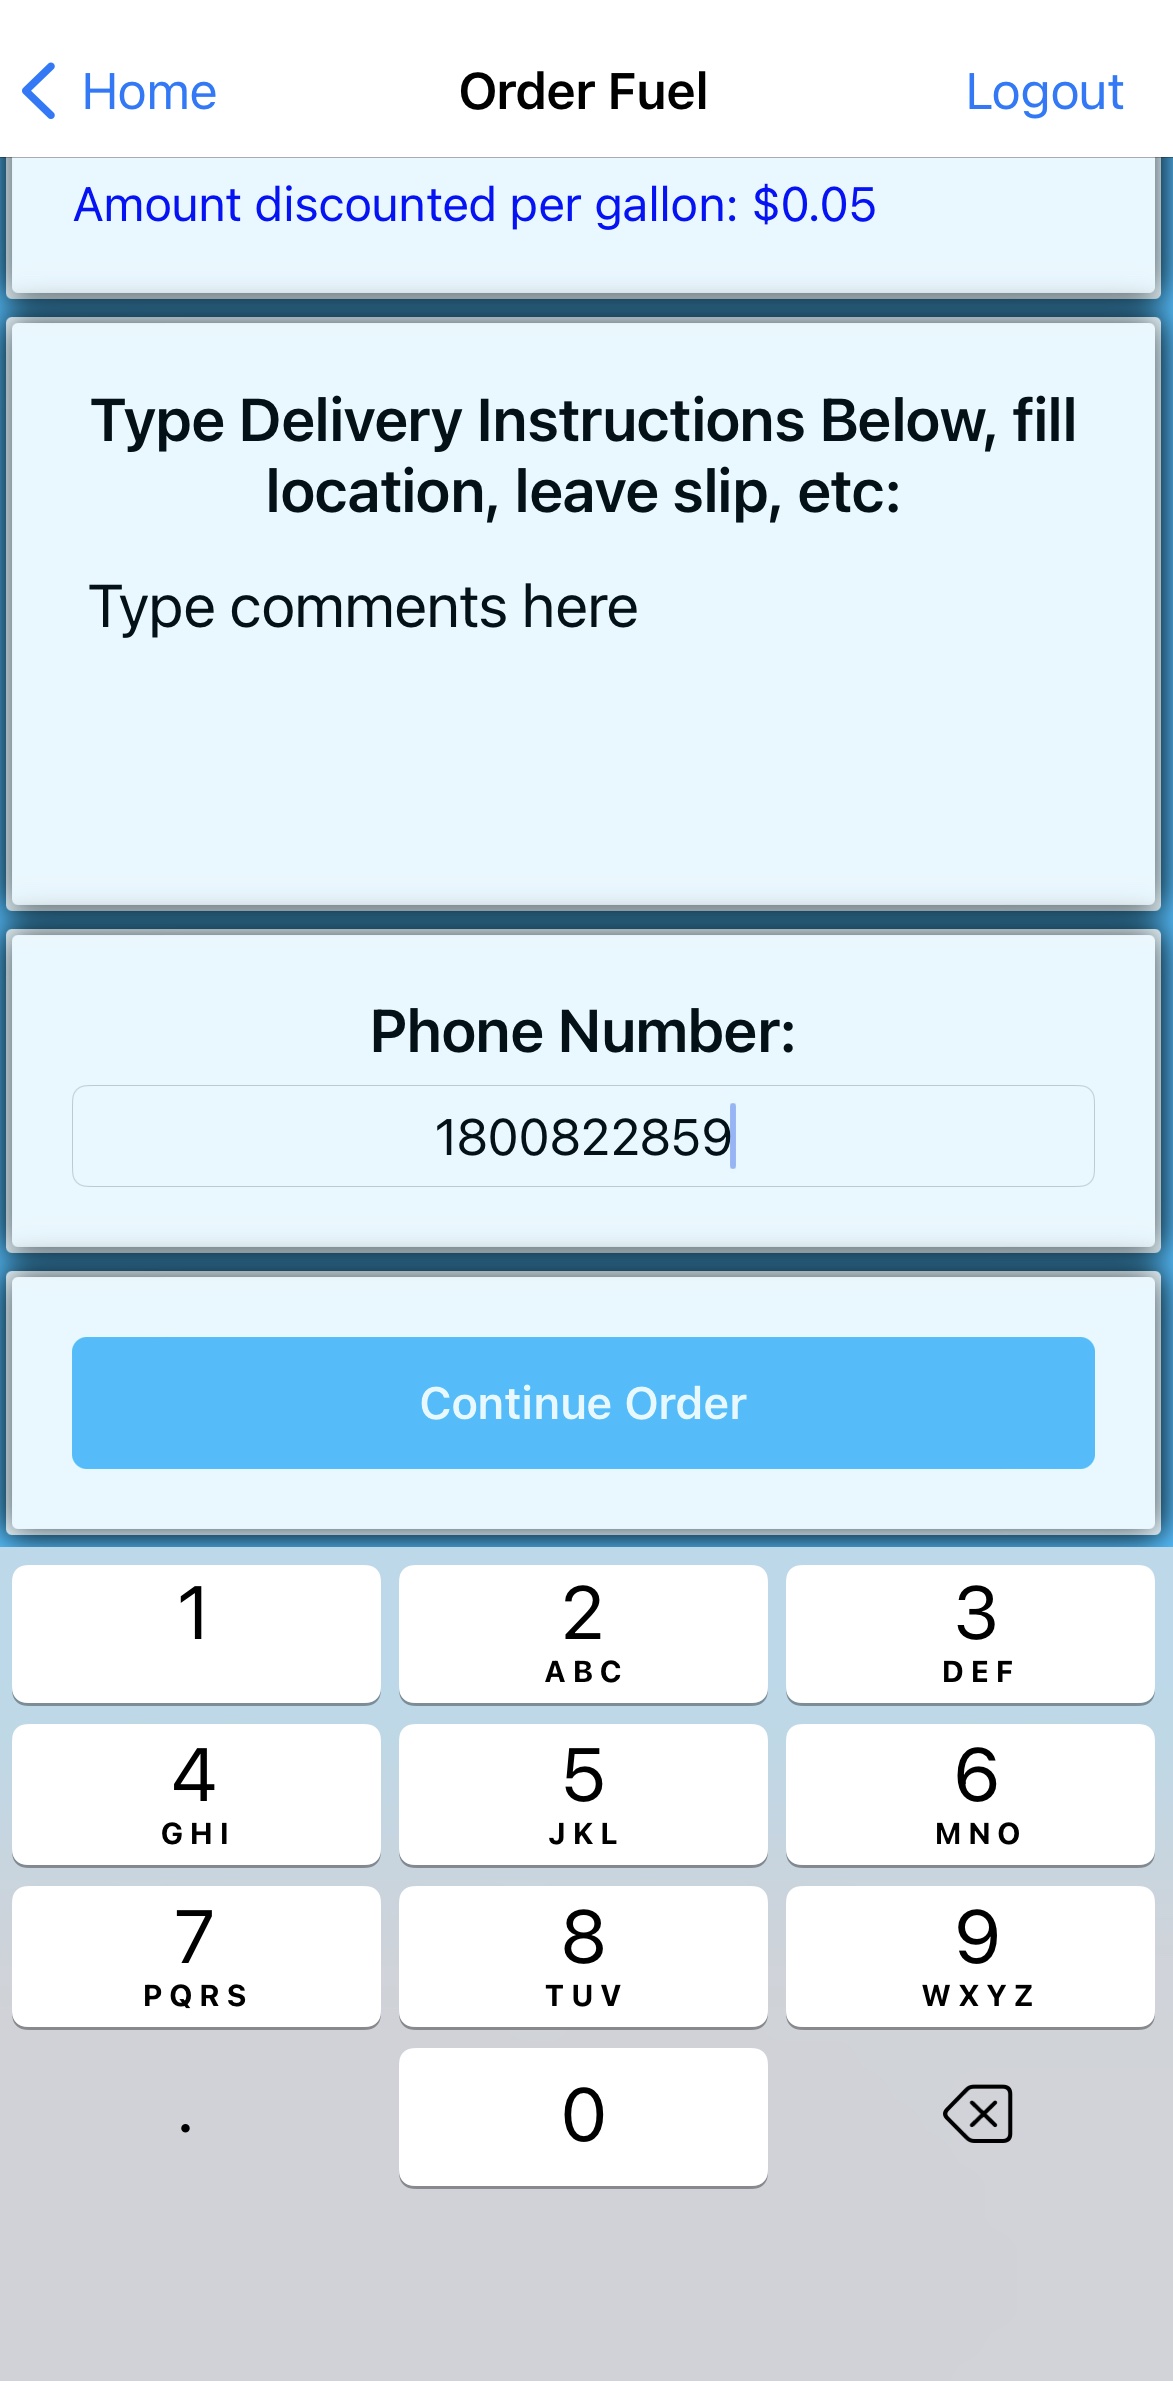 7 Phone Number